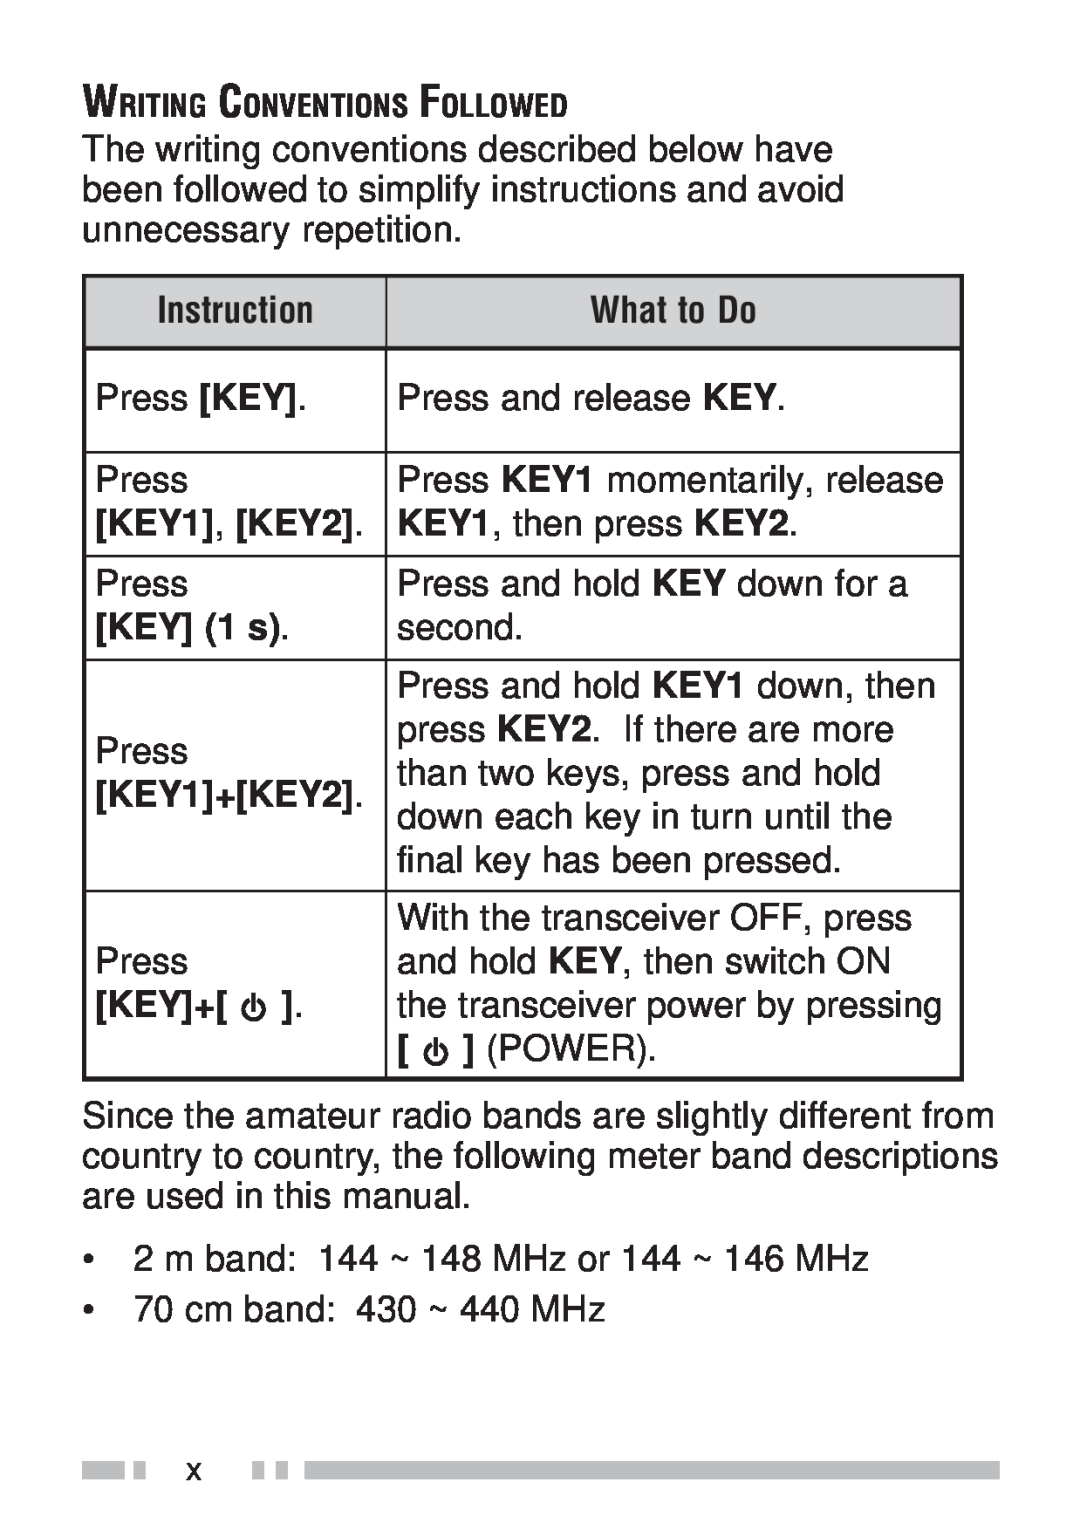 Kenwood TH-KAE, TH-K4AT, TH-K2ET, TH-K2AT instruction manual Instruction, What to Do, KEY1, KEY2, KEY 1 s, KEY1+KEY2, Key+ 